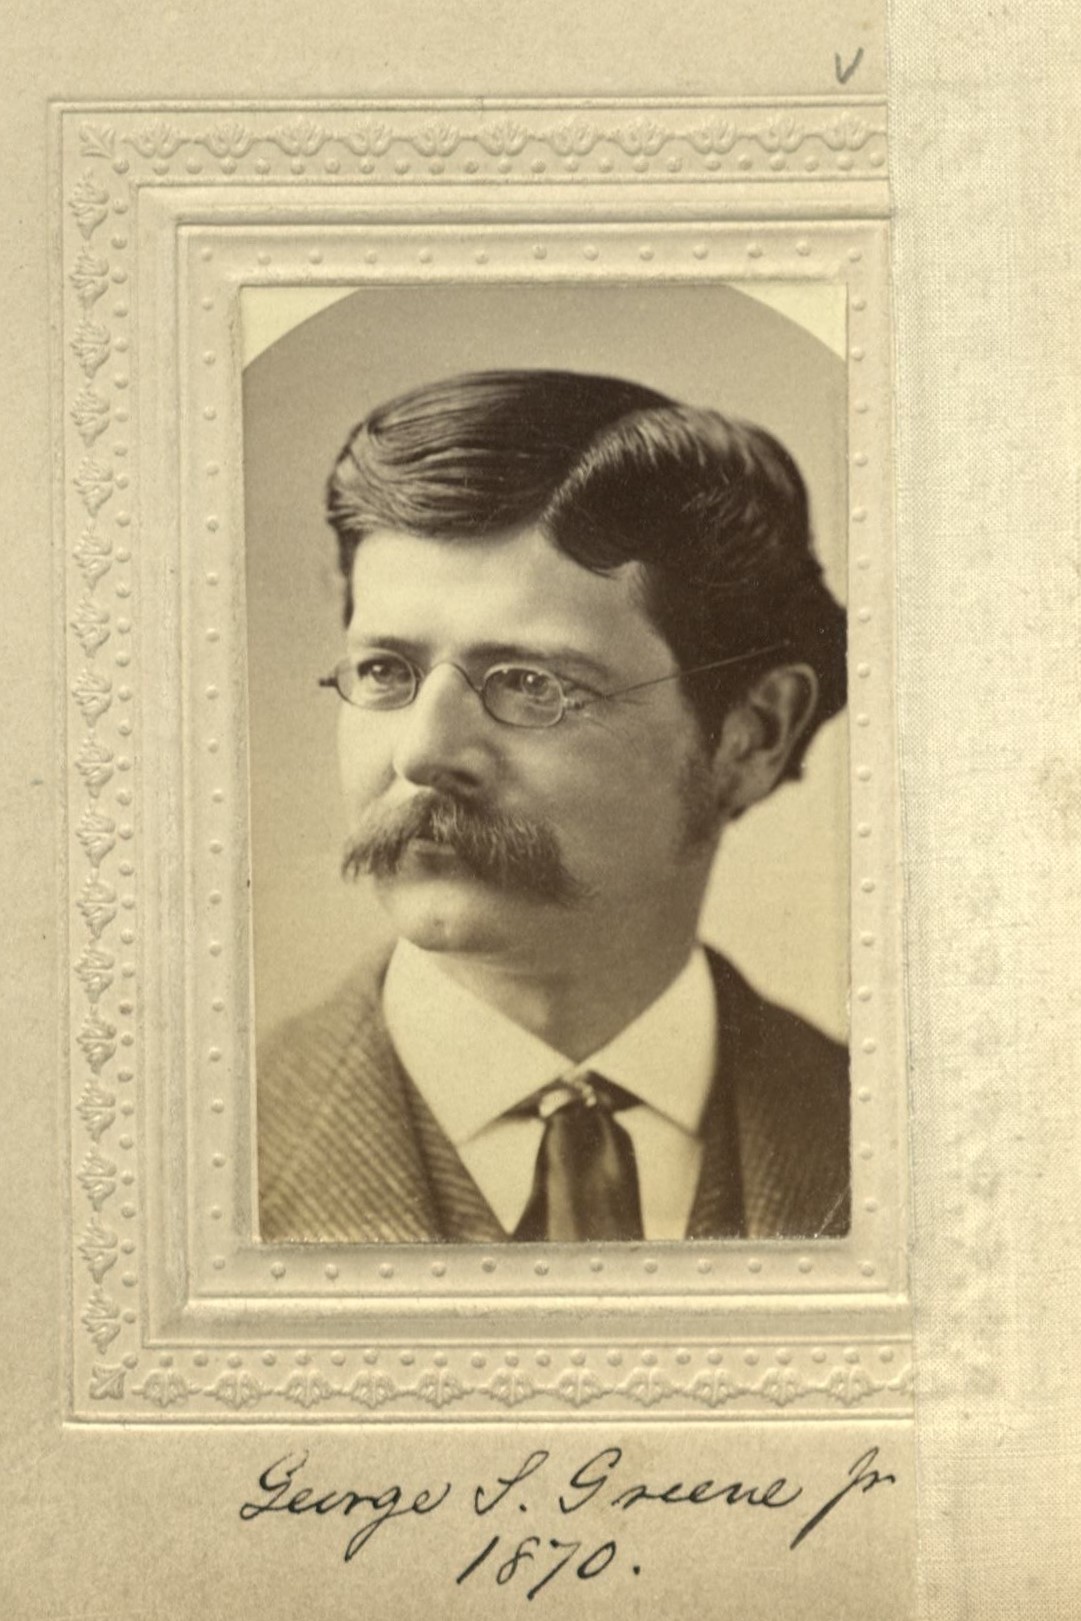 Member portrait of George S. Greene Jr.